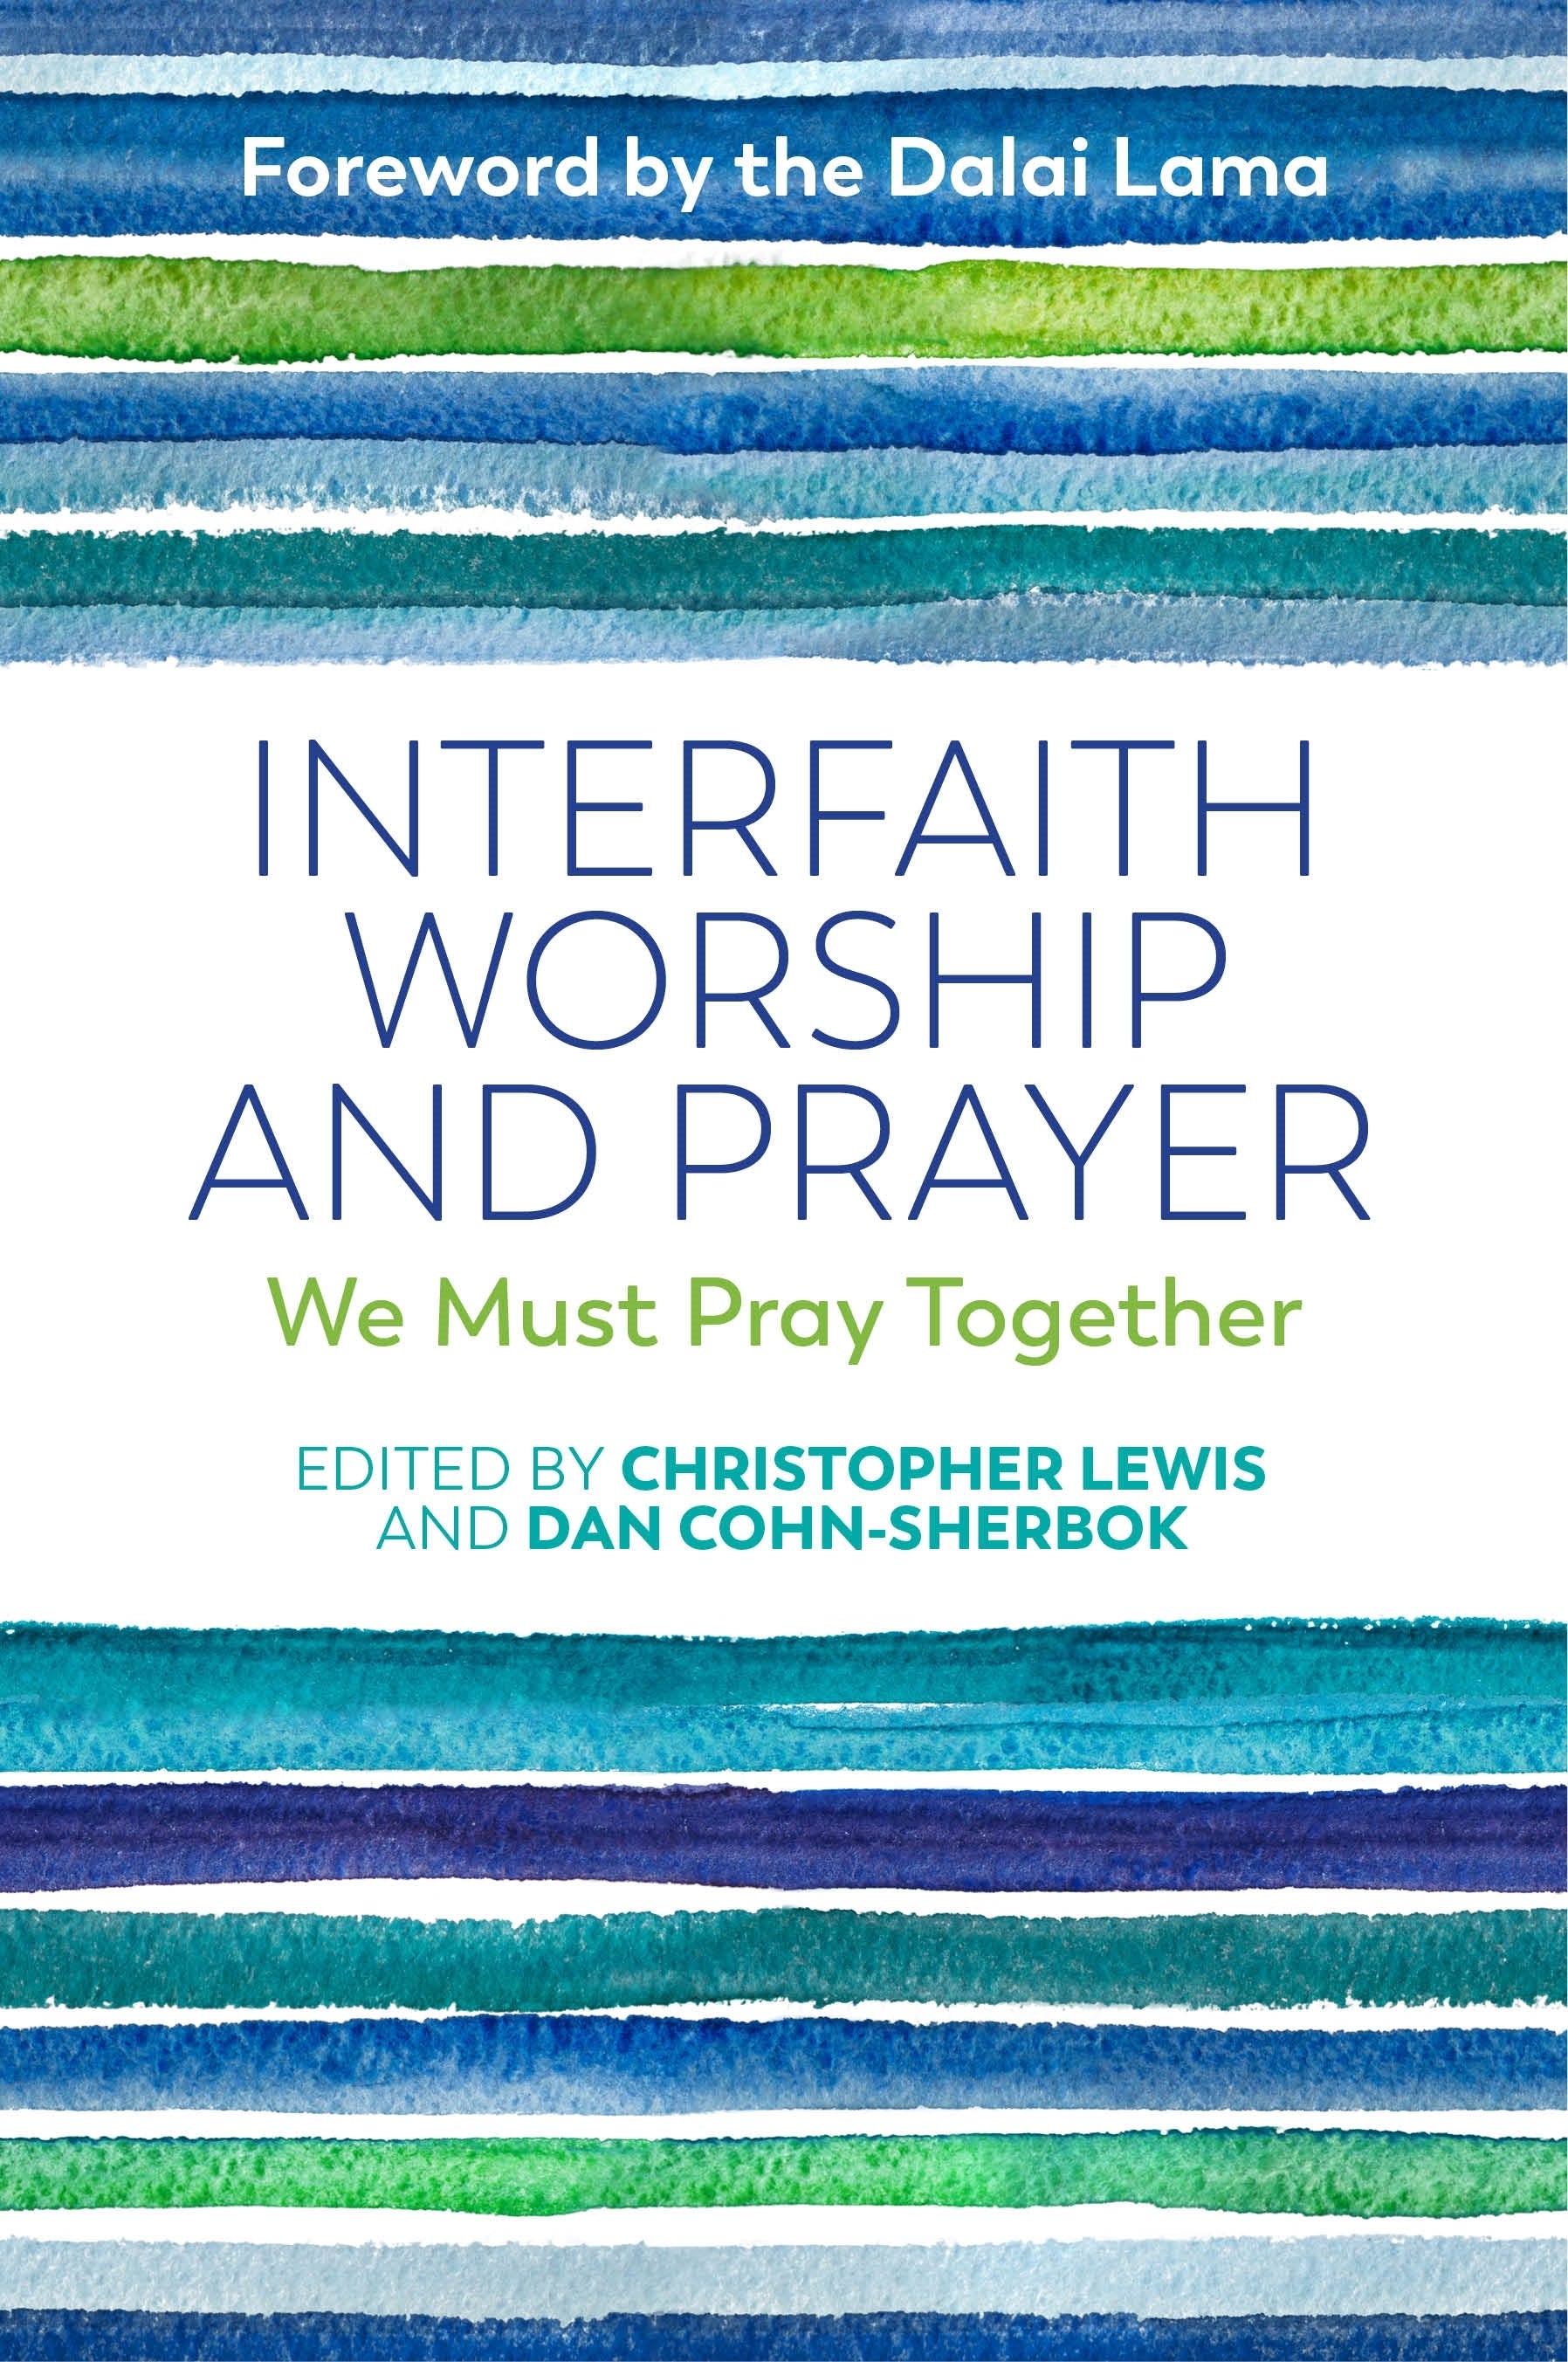 Interfaith Worship and Prayer by Christopher Lewis, Dan Cohn-Sherbok, Dalai Lama